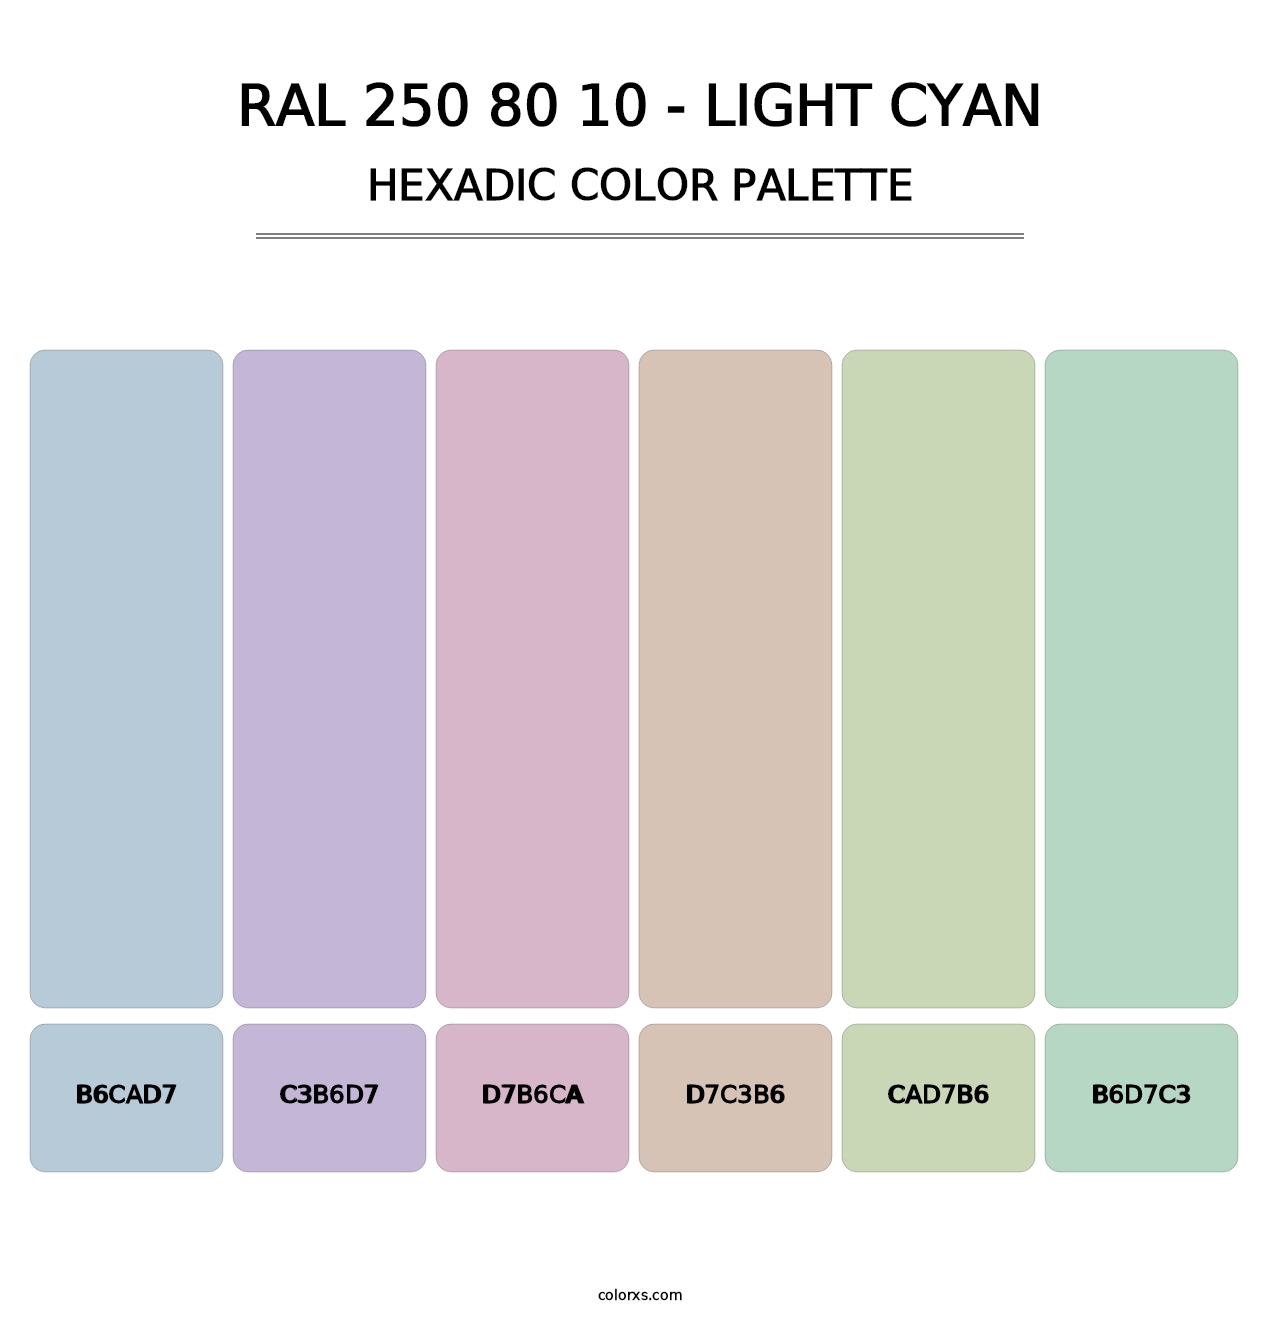 RAL 250 80 10 - Light Cyan - Hexadic Color Palette